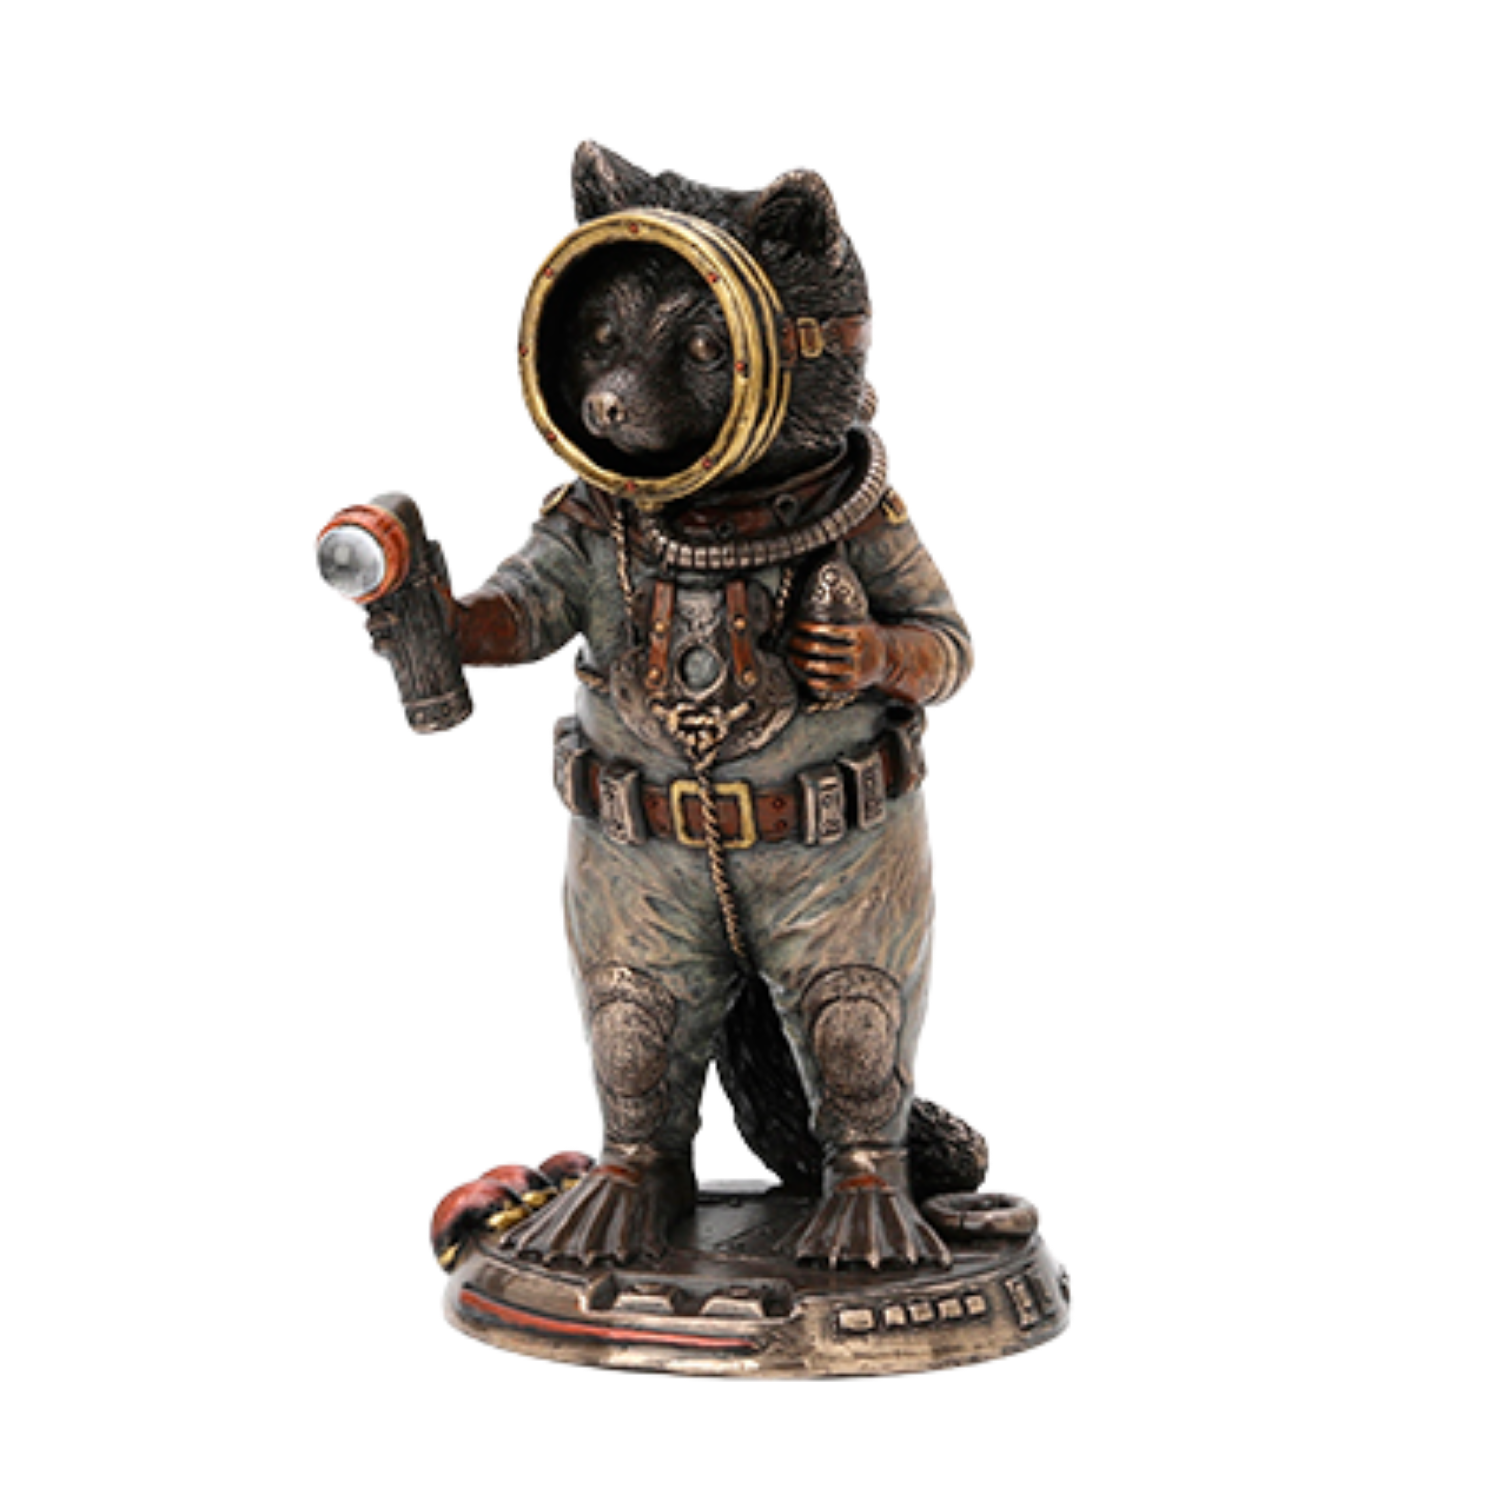 Steampunk Raccoon Frogman Cadet Figurine